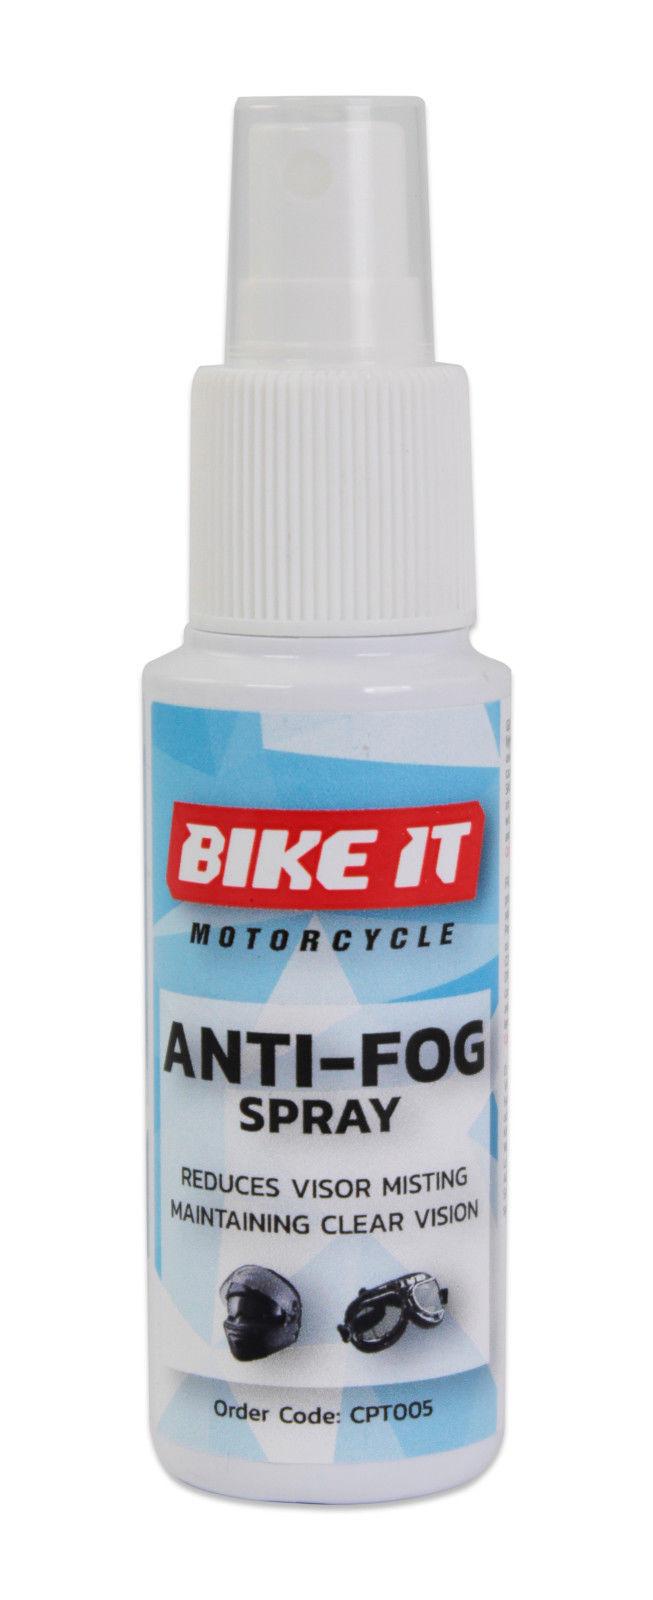 Bike IT Anti-Fog Spray